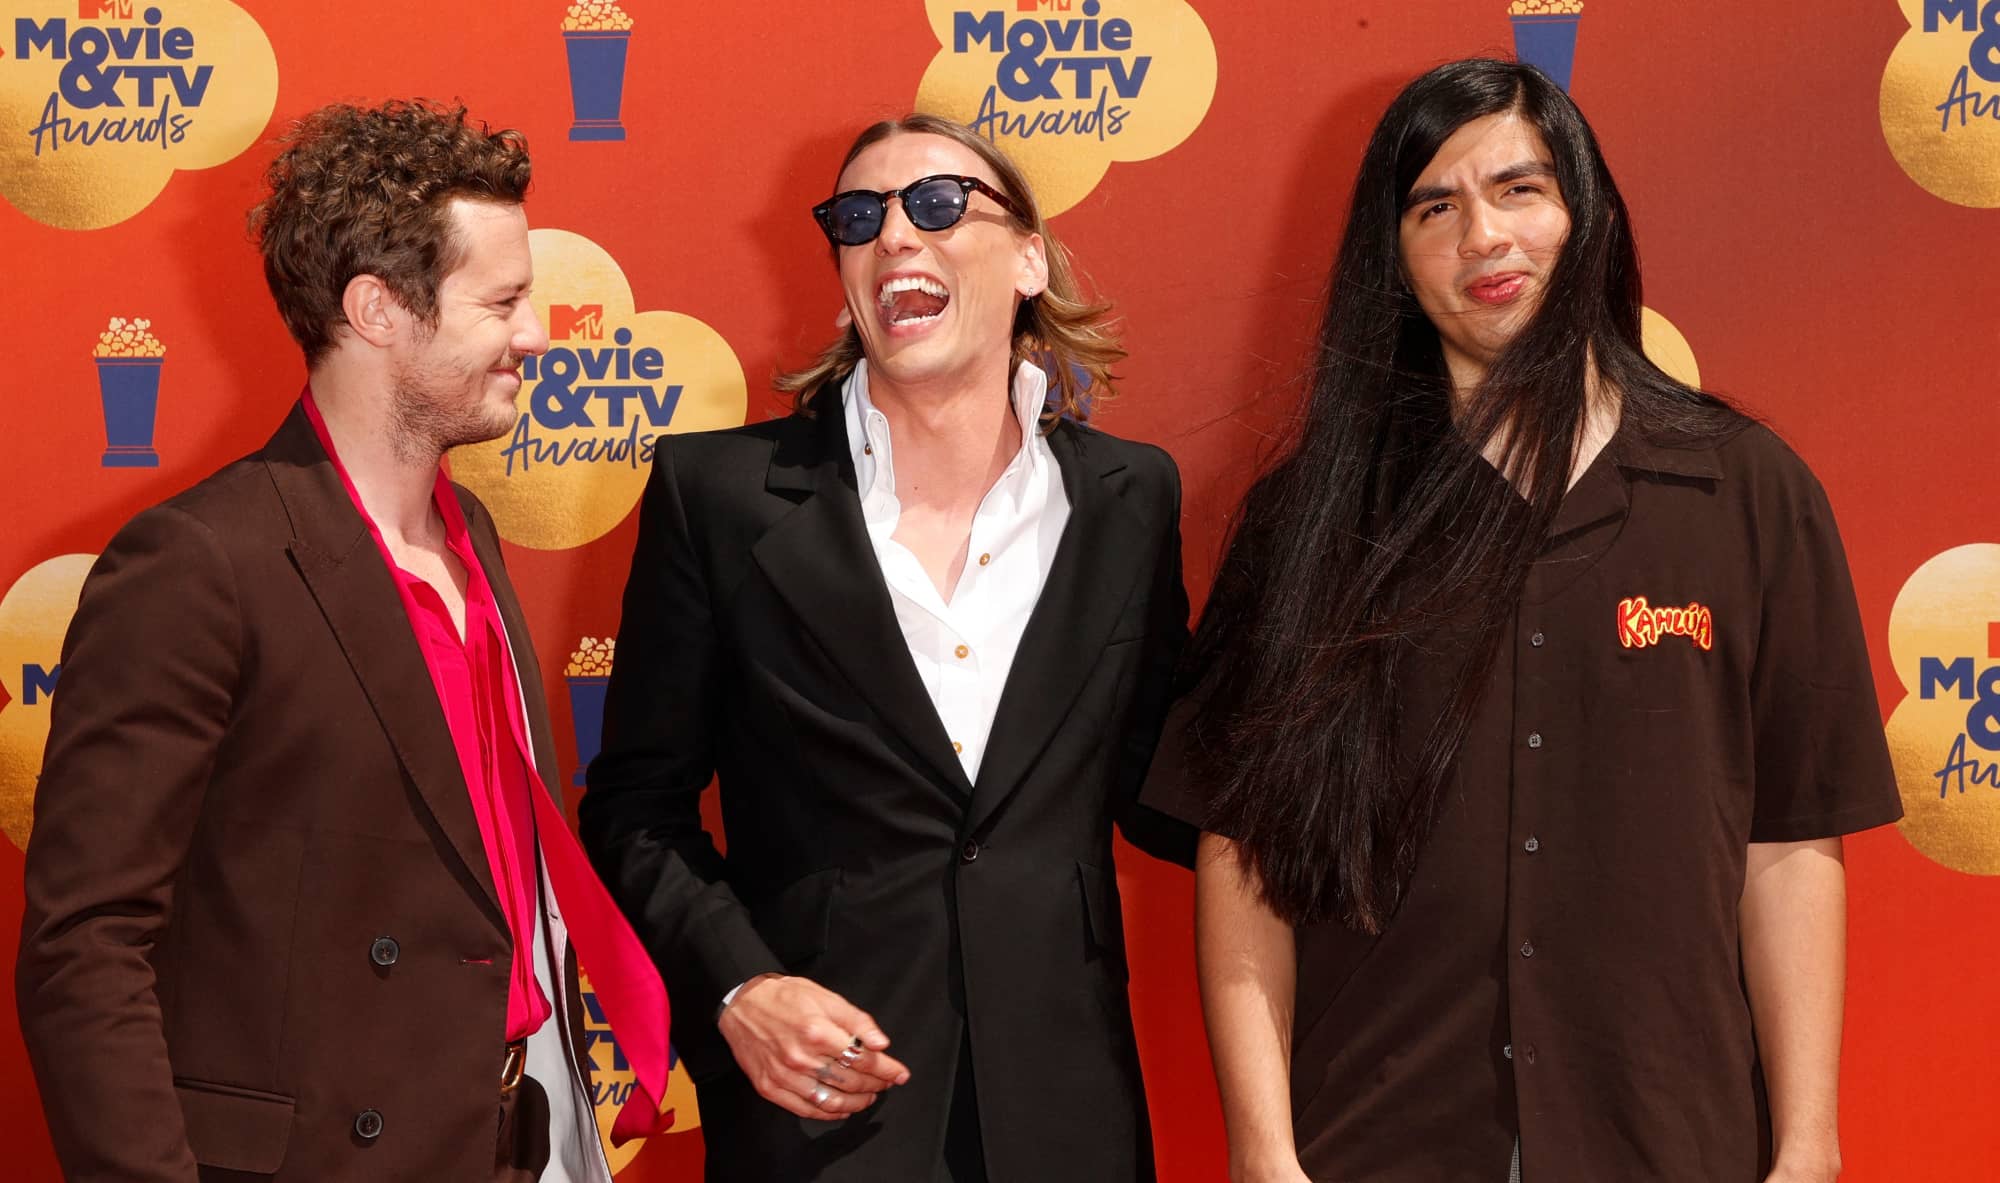 Joseph Quinn, Jamie Campbell Bower and Eduardo Franco on the red carpet at the MTV Awards